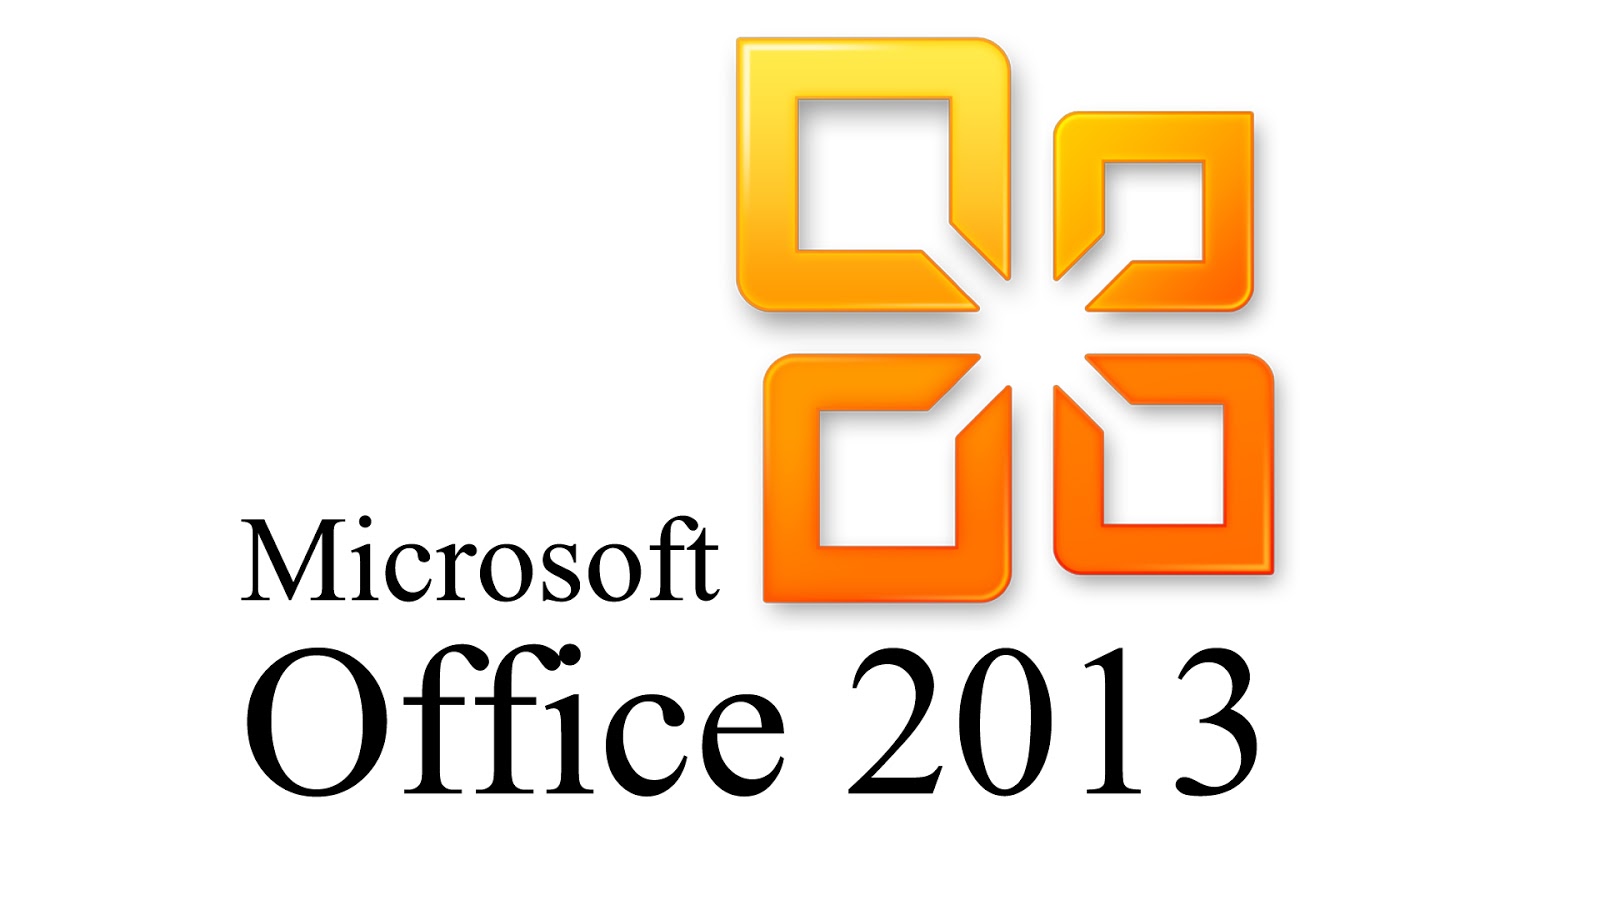 Comment Ca Marche Download Microsoft Office 13